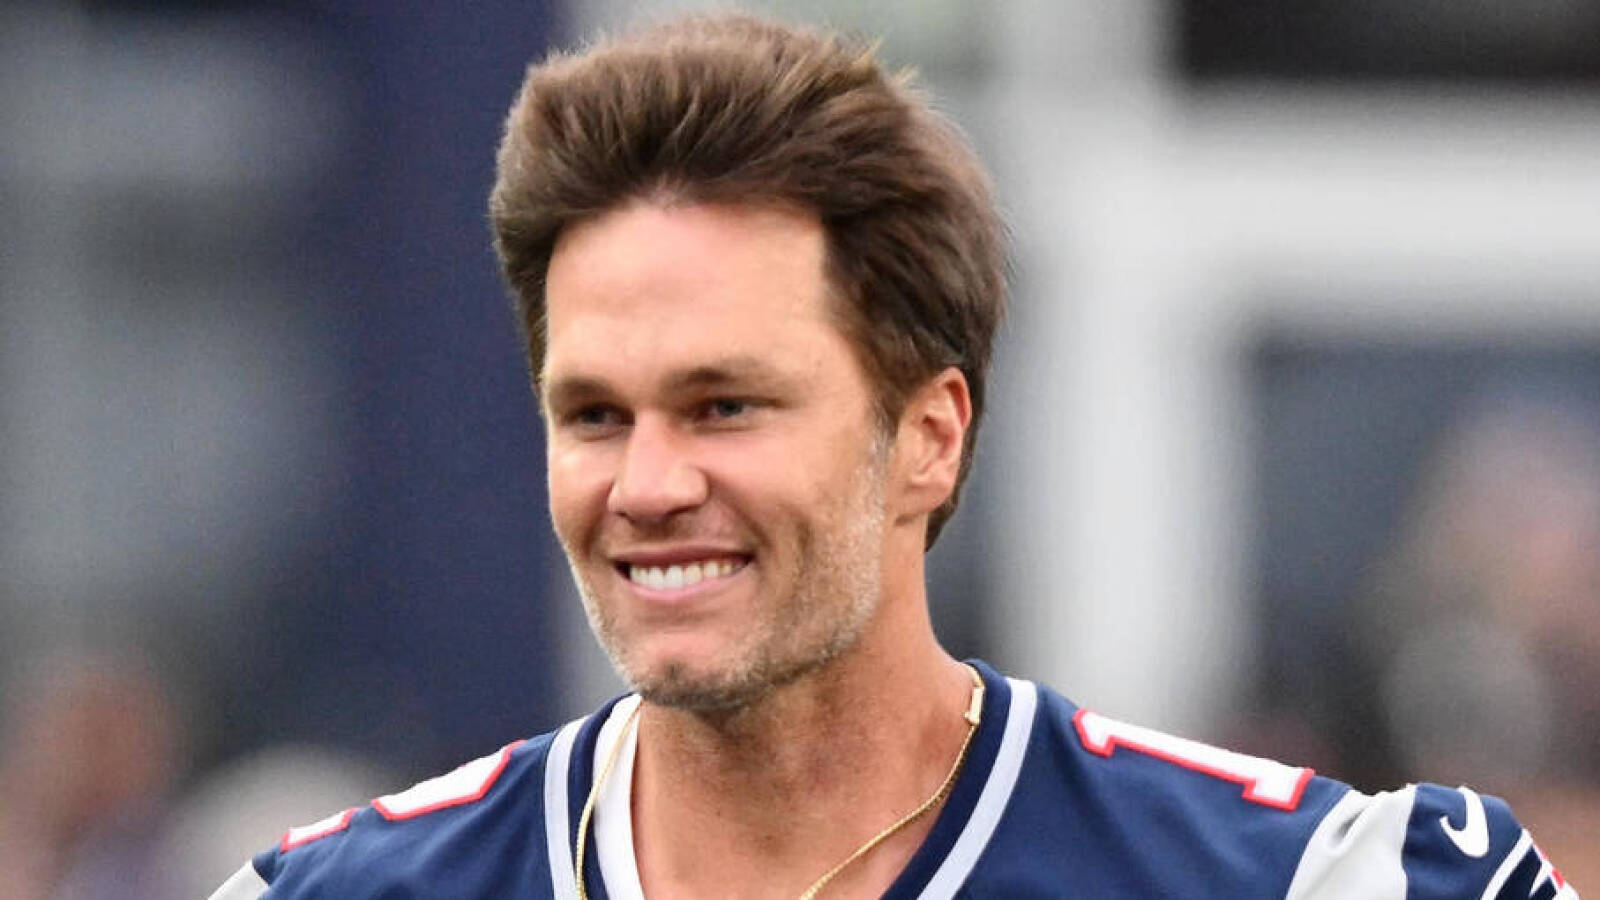 Tom Brady's broadcasting debut set for Week 1 of NFL season